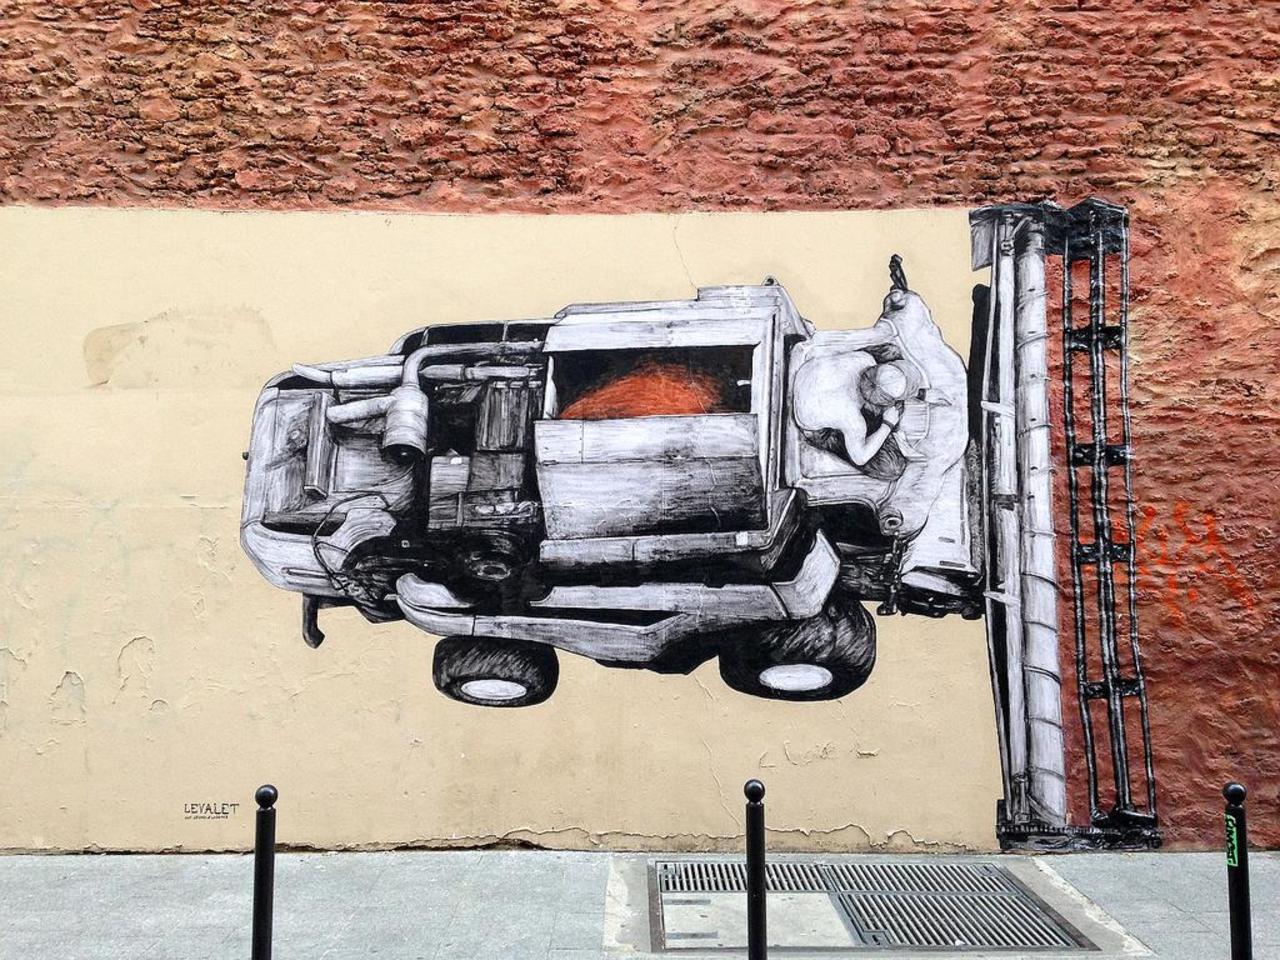 RT @urbacolors: Street Art by Levalet in #Paris http://www.urbacolors.com #art #mural #graffiti #streetart http://t.co/L4eTyOEOMd